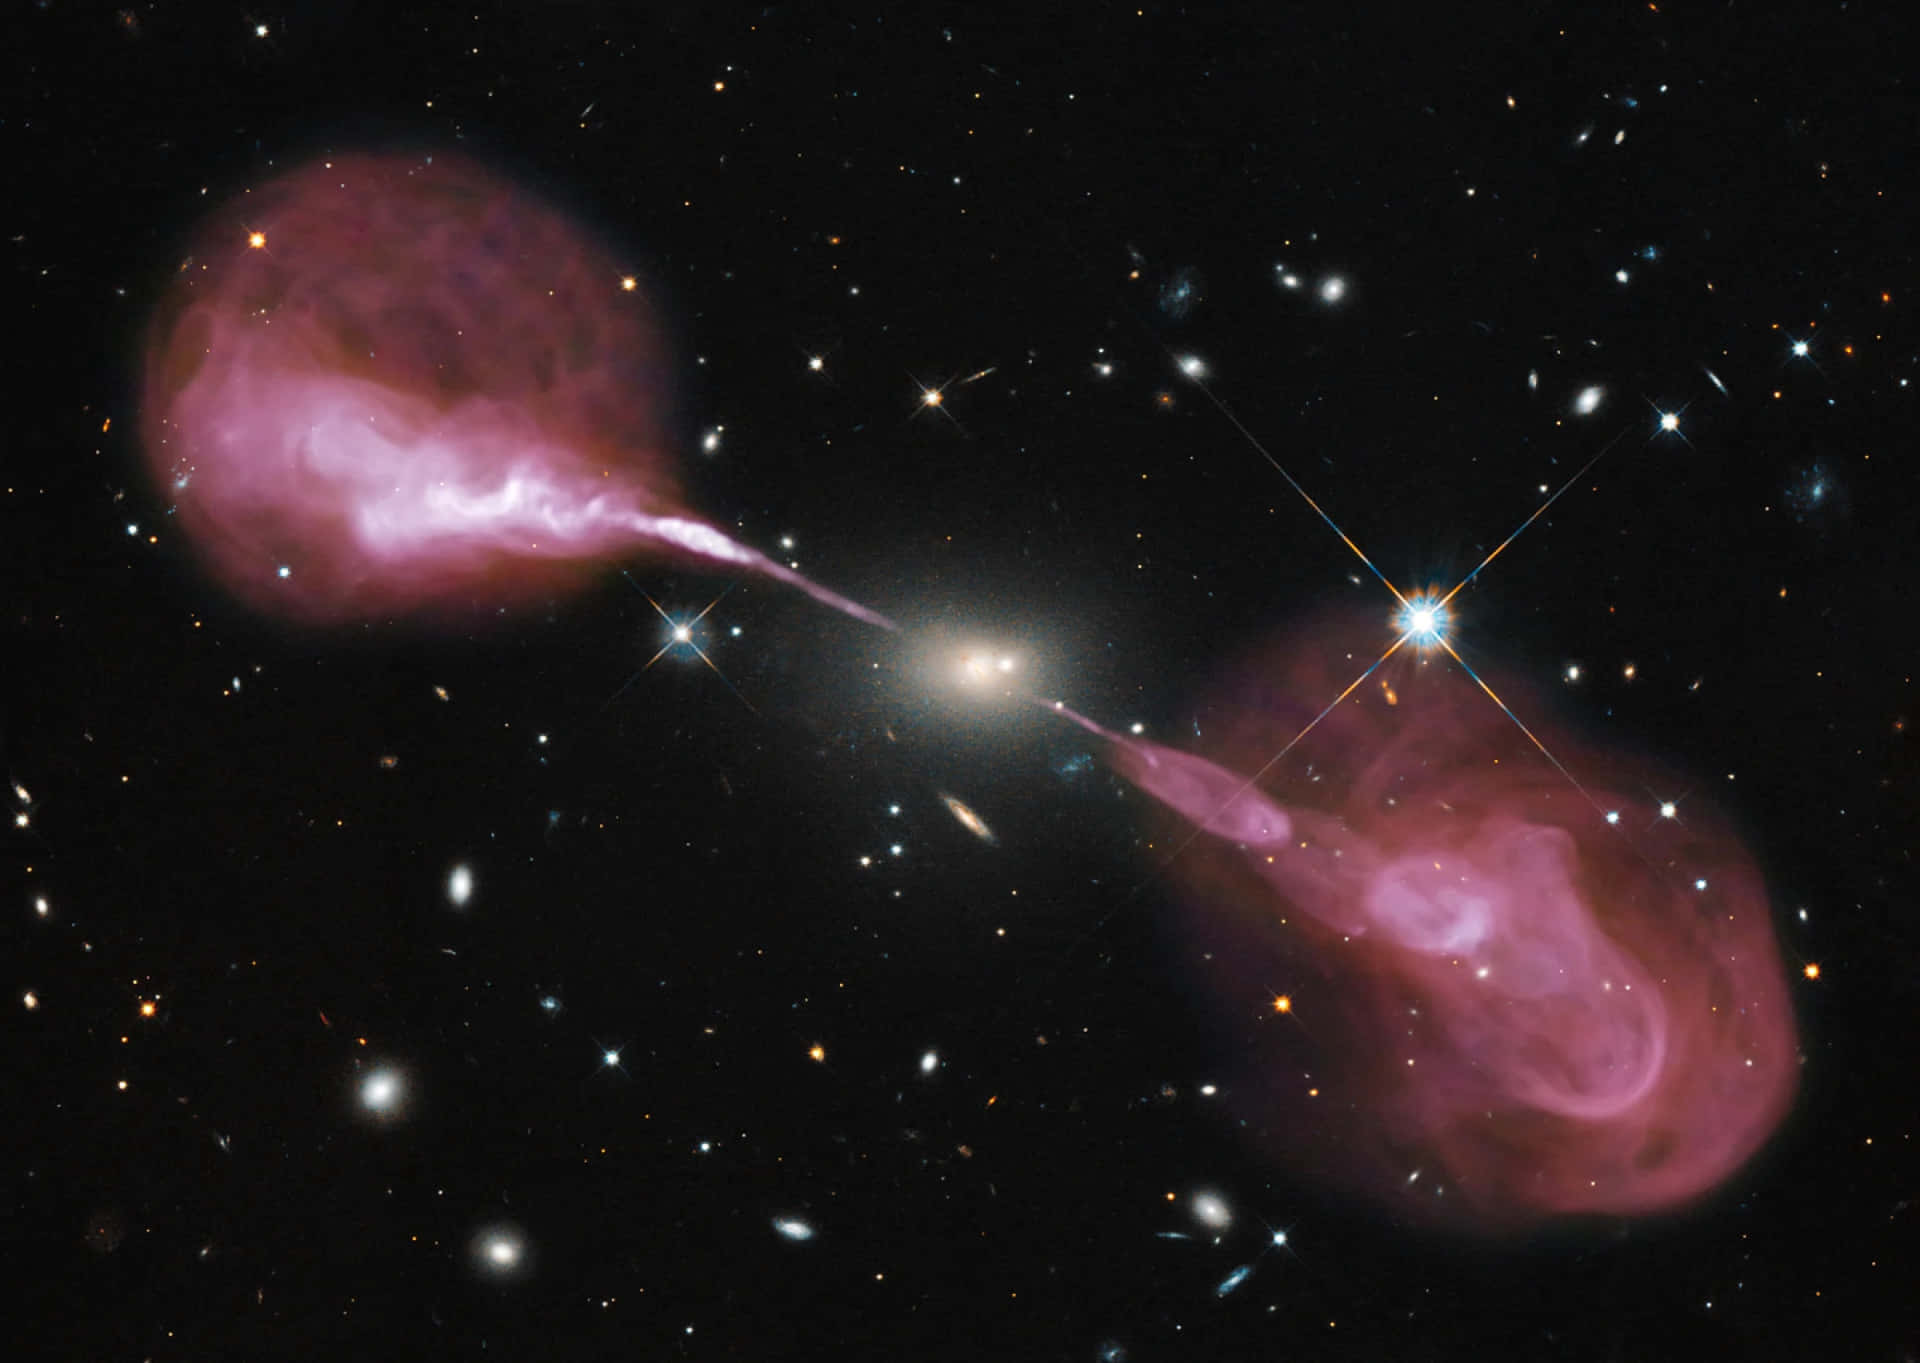 Hubble Telescope reveals a magnificent close-up of a black hole